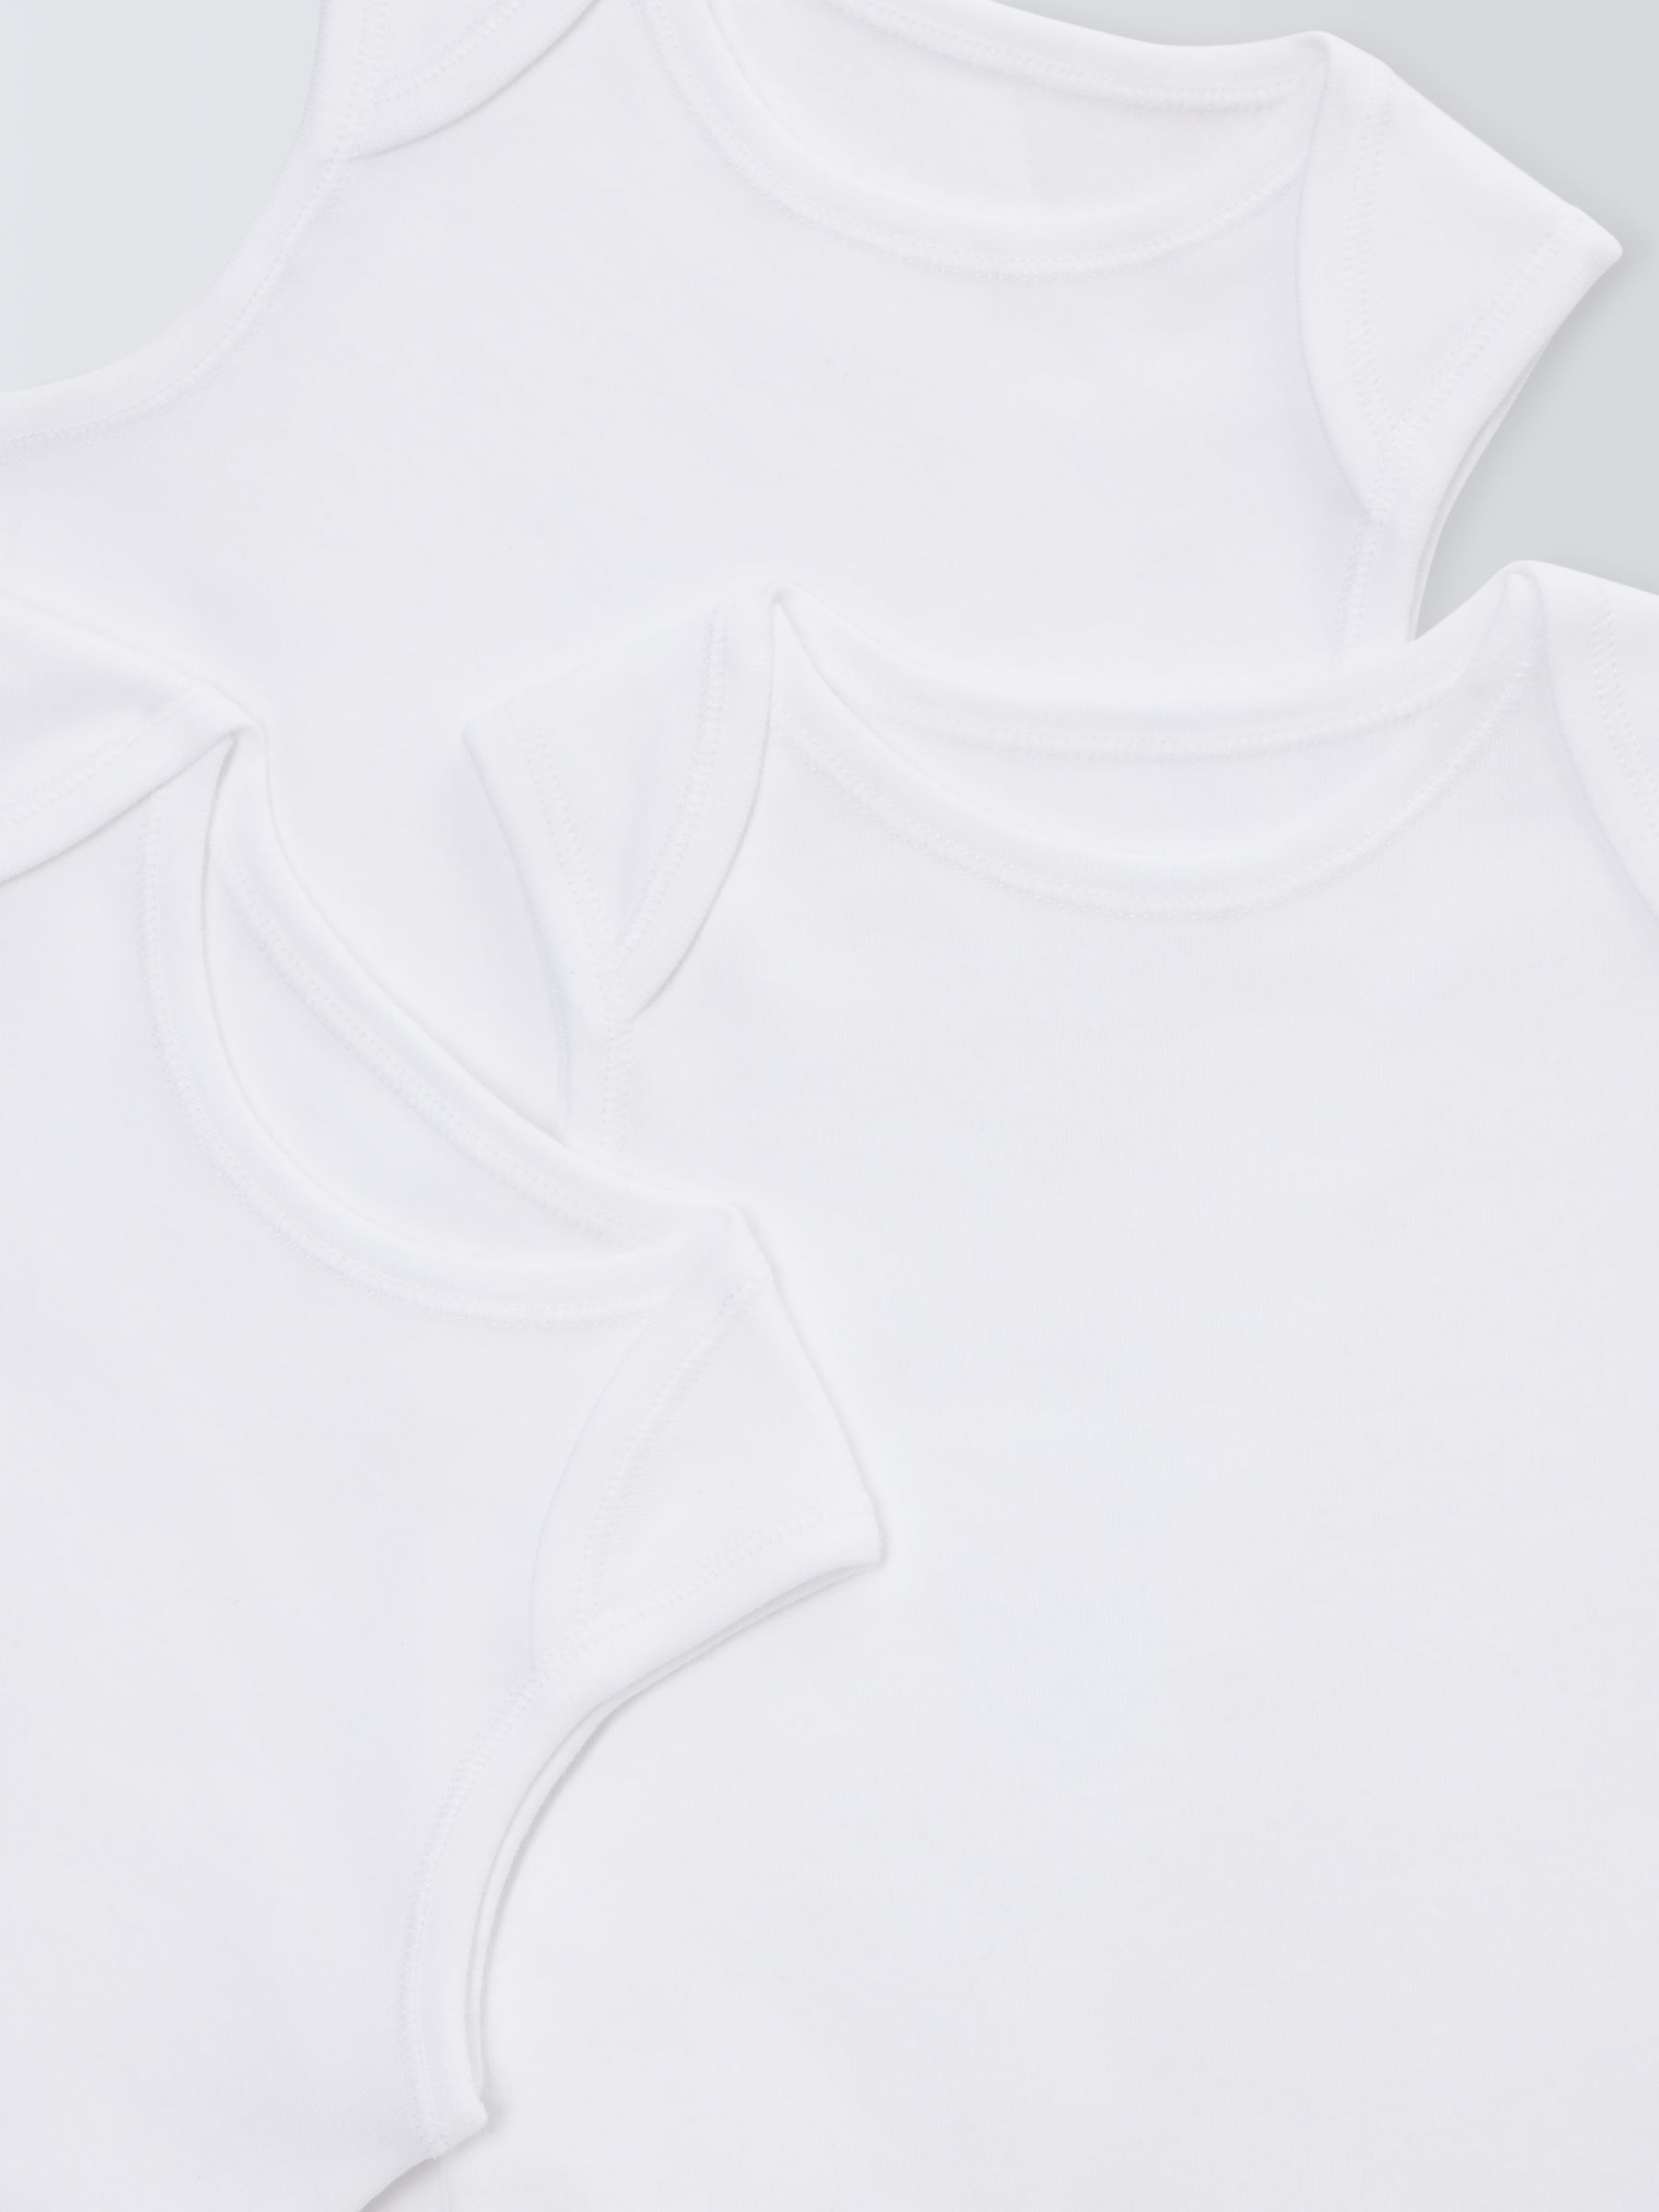 Buy John Lewis Baby Sleeveless Organic GOTS Cotton Bodysuits, Pack of 5, White Online at johnlewis.com